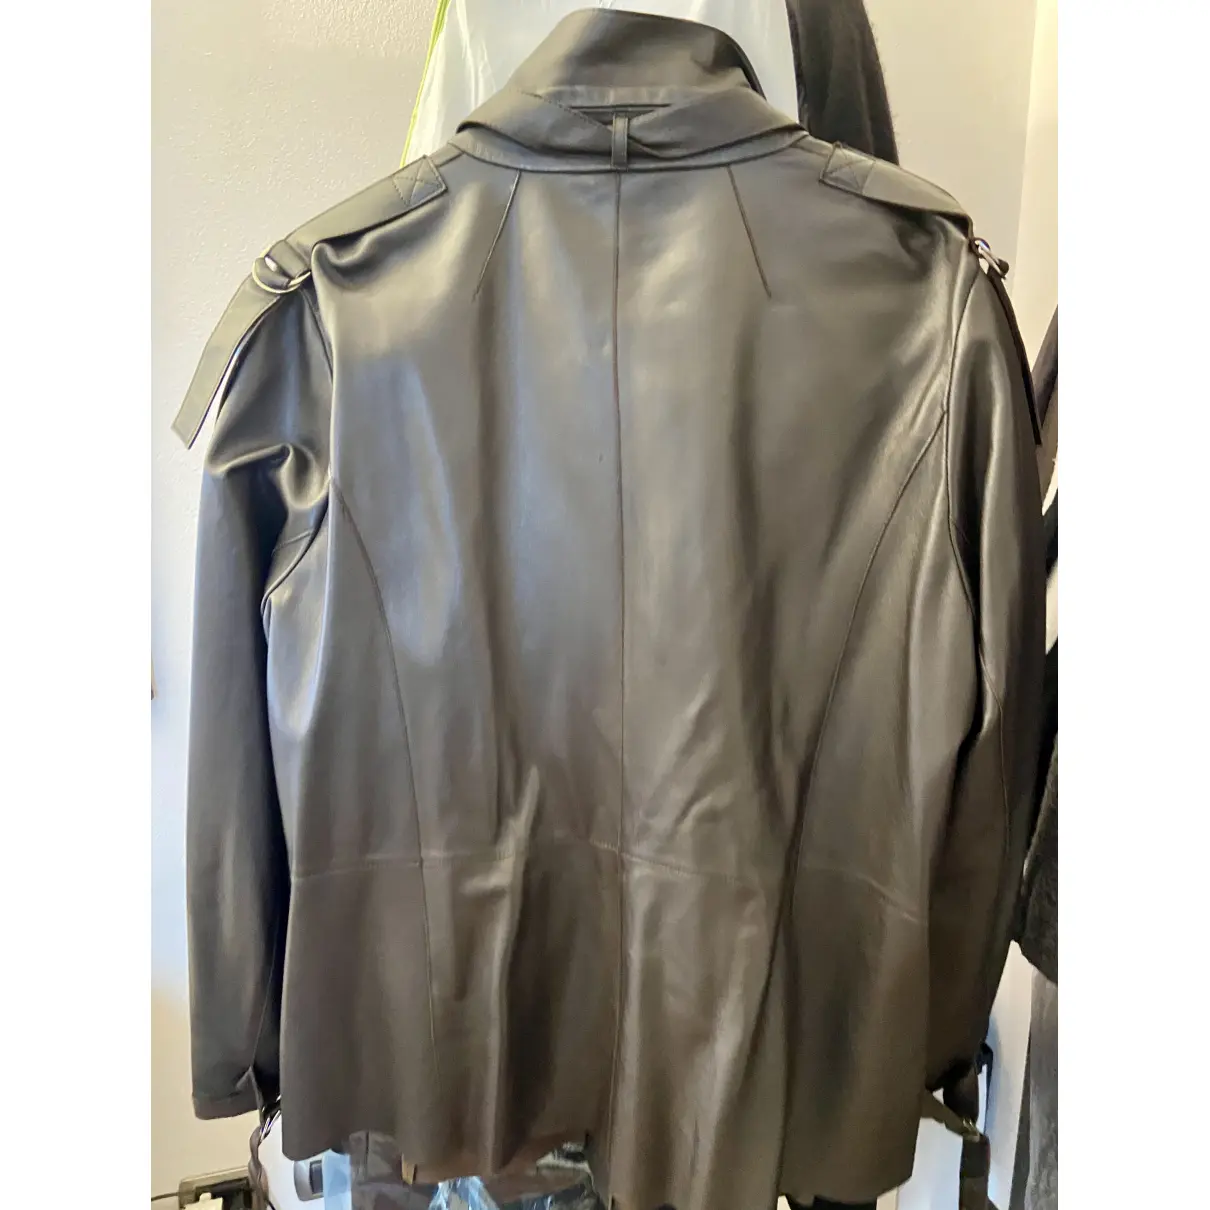 Buy MARINA RINALDI Leather biker jacket online